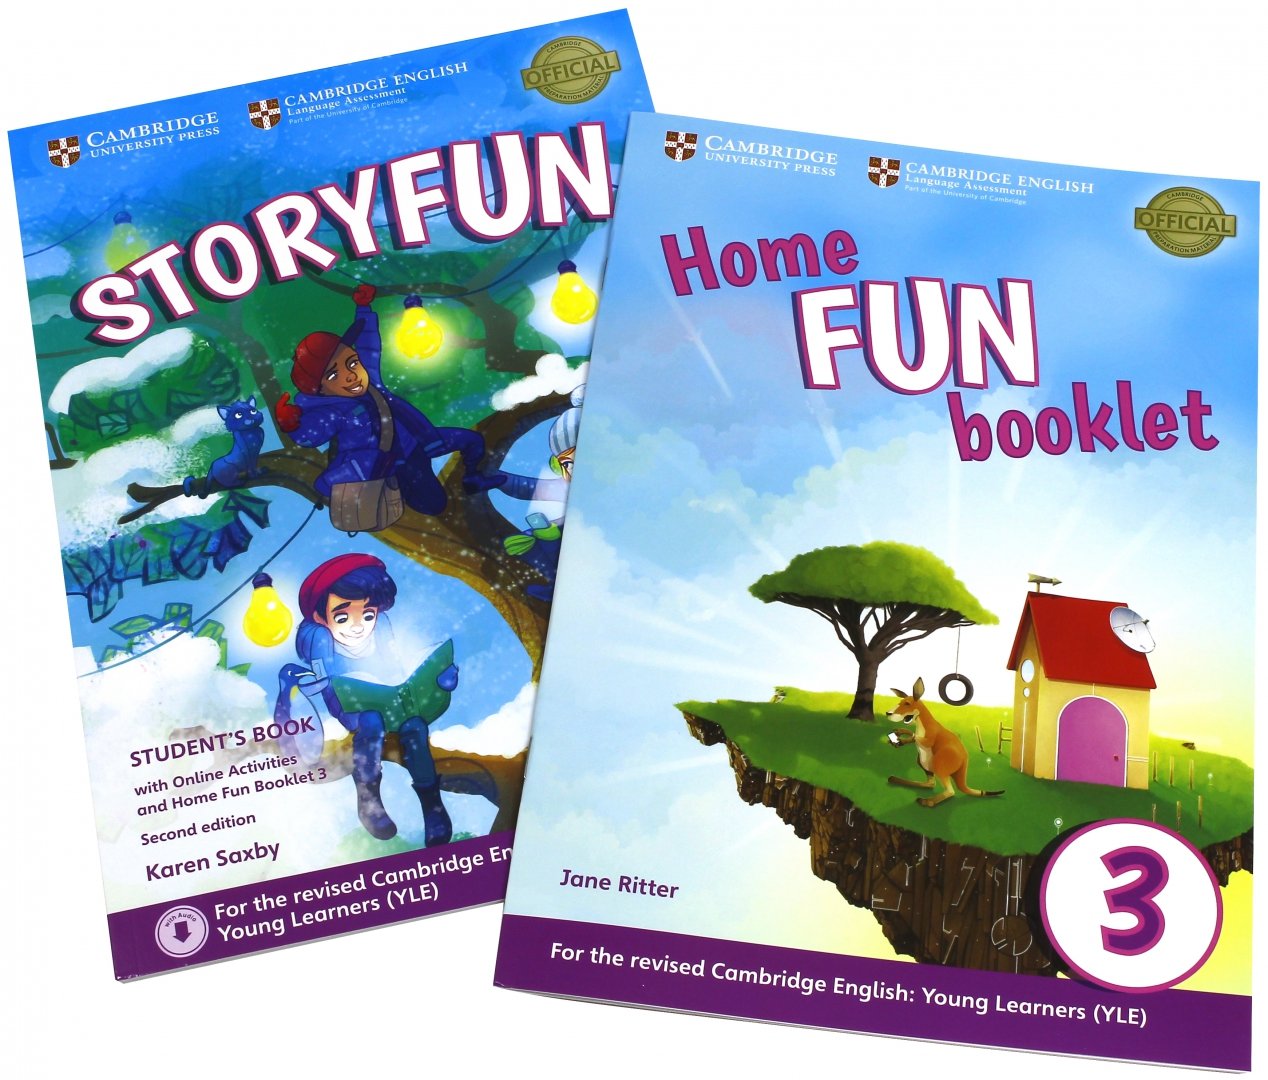 Home fun booklet. Storyfun 1. Storyfun 3 booklet. Storyfun 5 SB. Storyfun 4 SB.